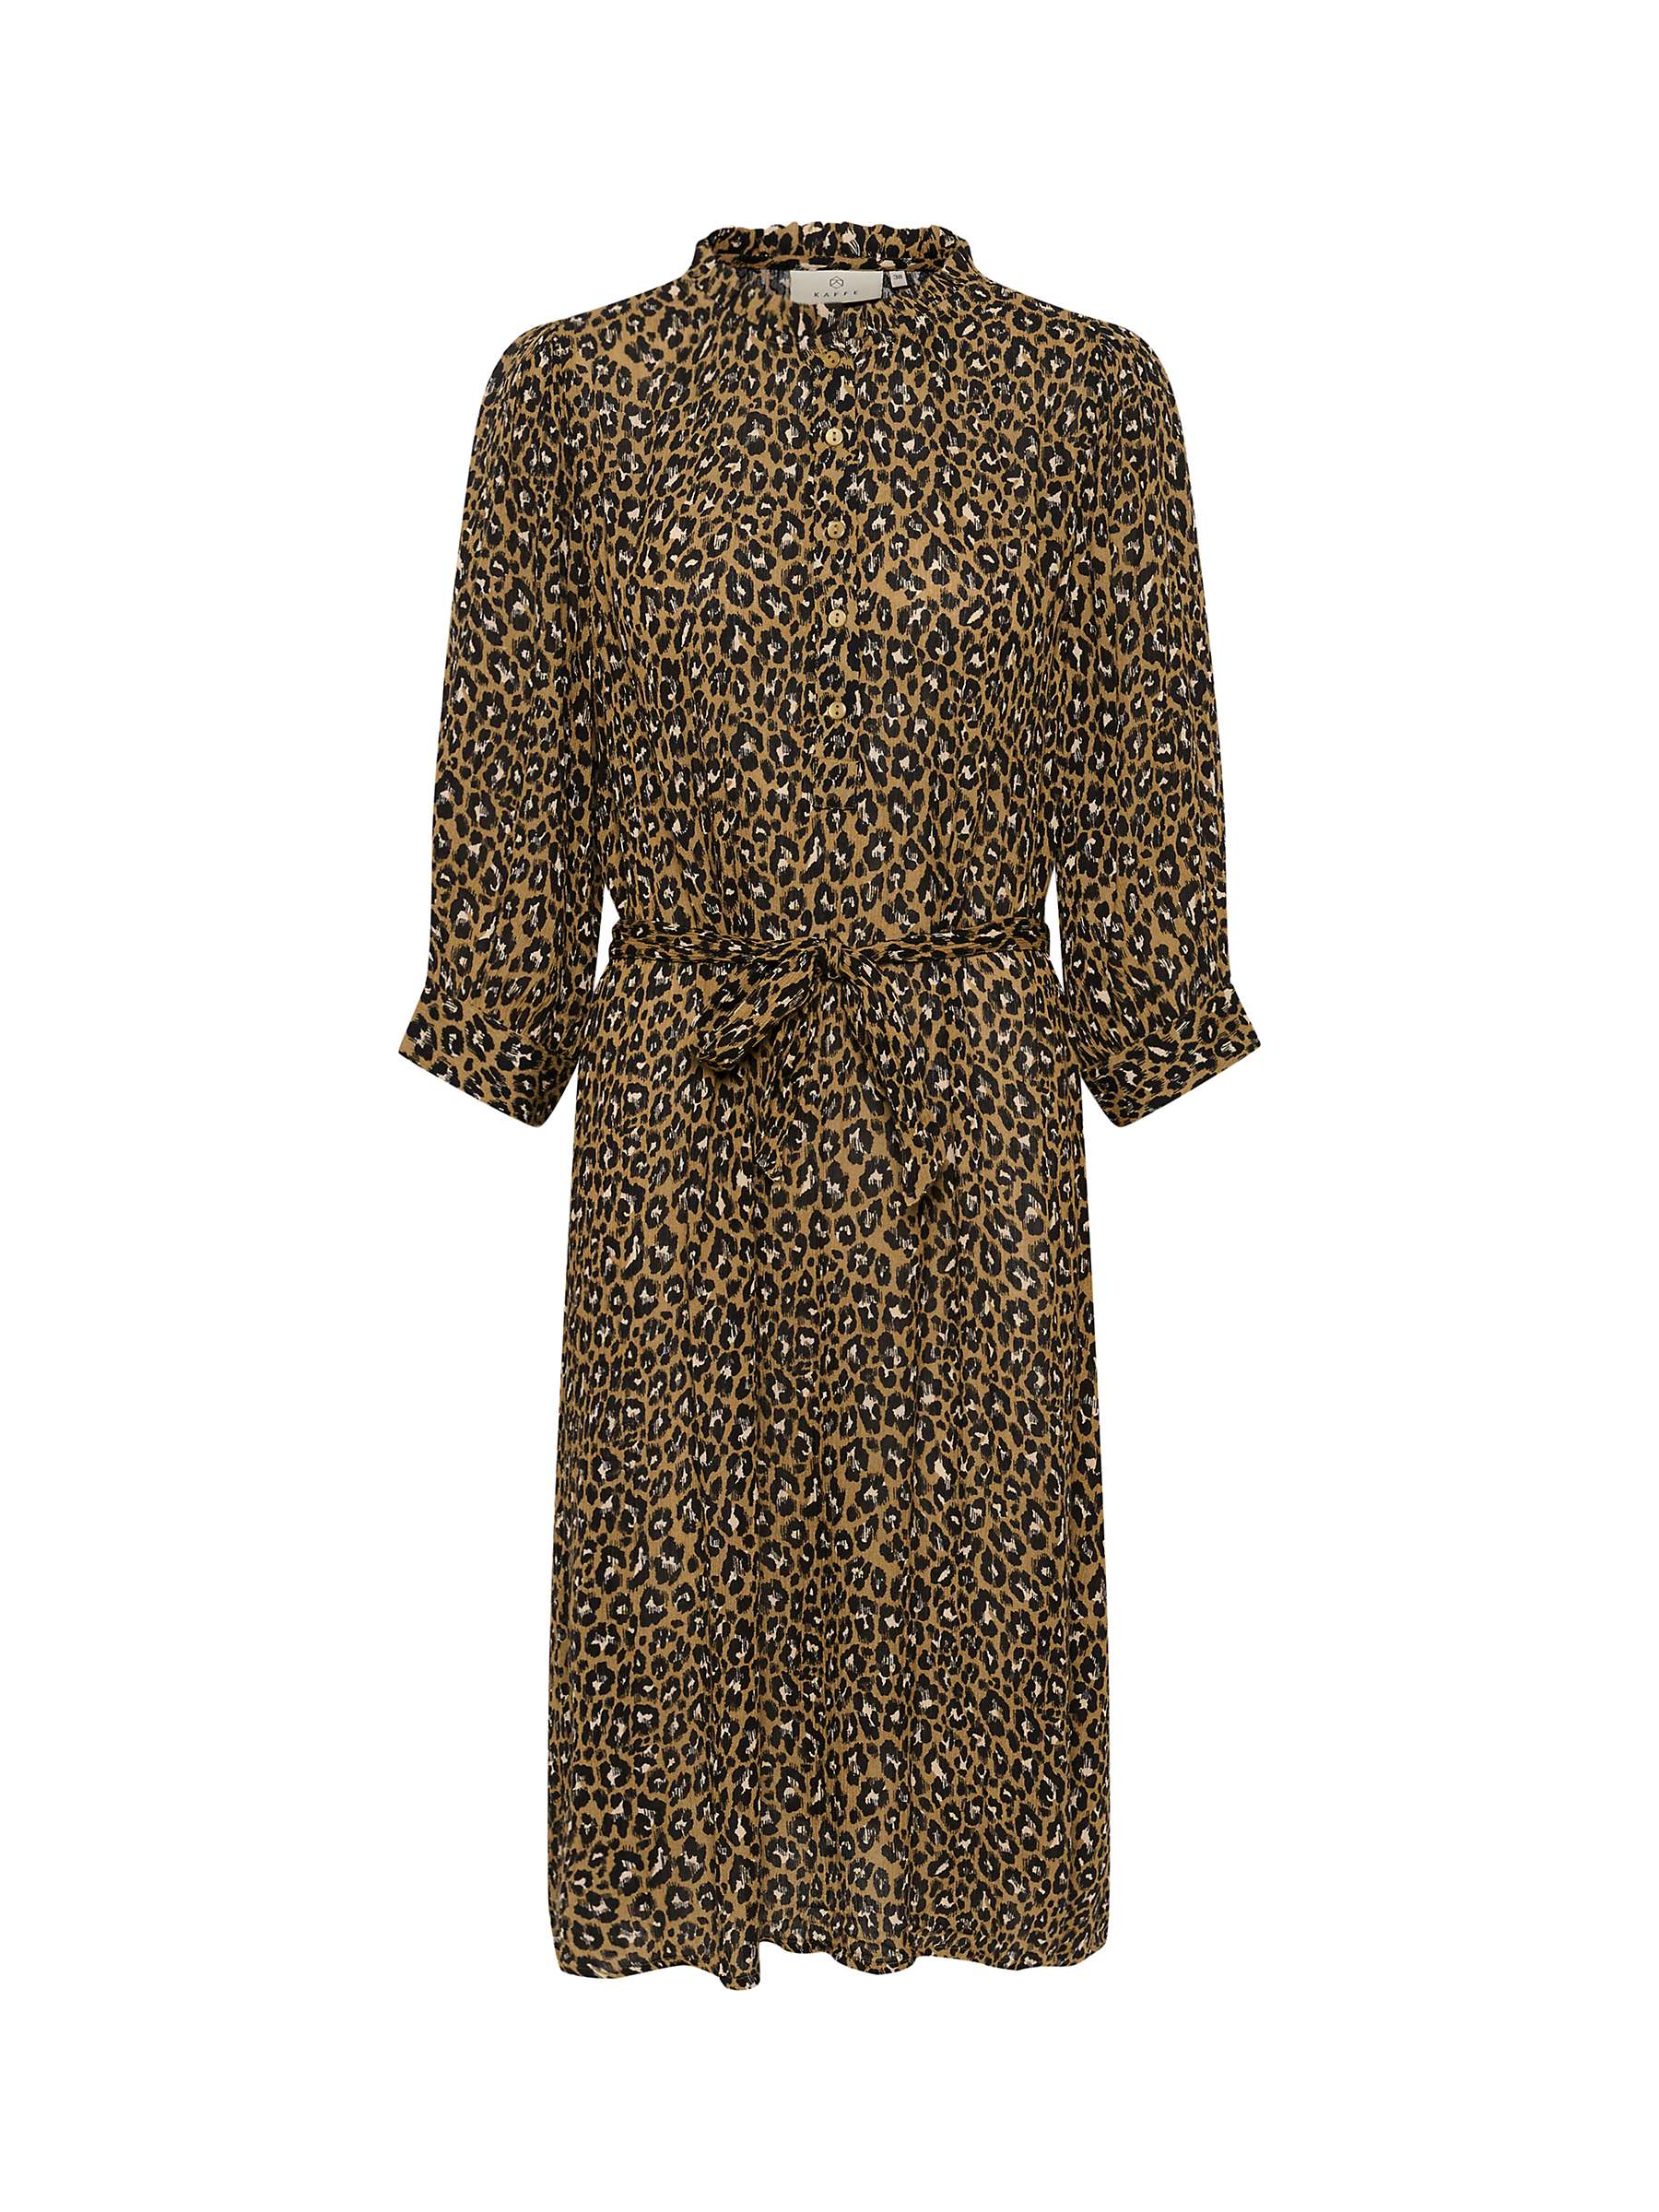 Buy KAFFE Vibeke Leopard Print Knee Length Dress, Brown/Black Online at johnlewis.com